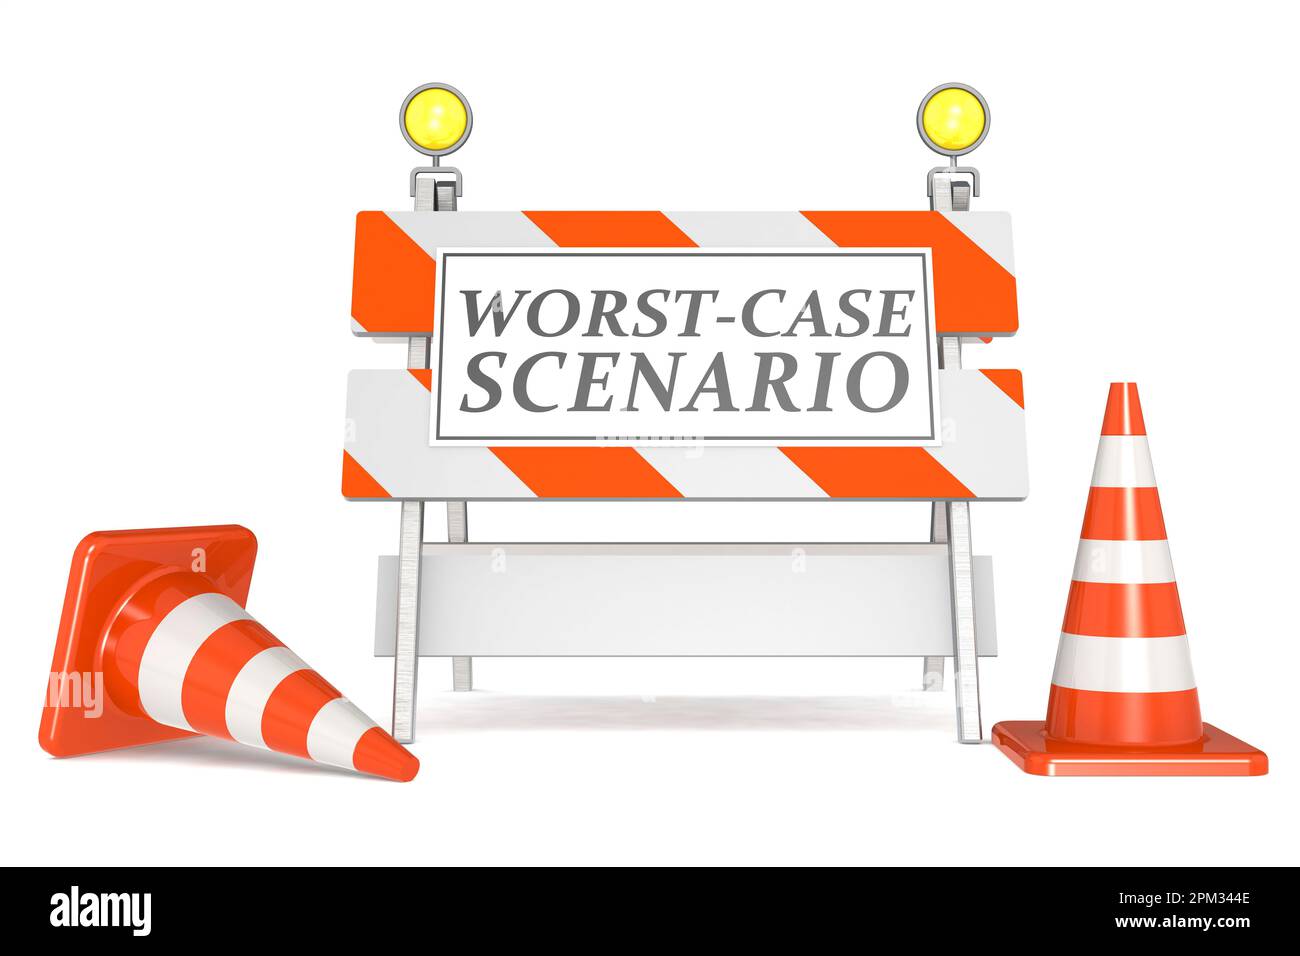 Worst case scenario sign on barricade and traffic cones, 3D rendering Stock Photo